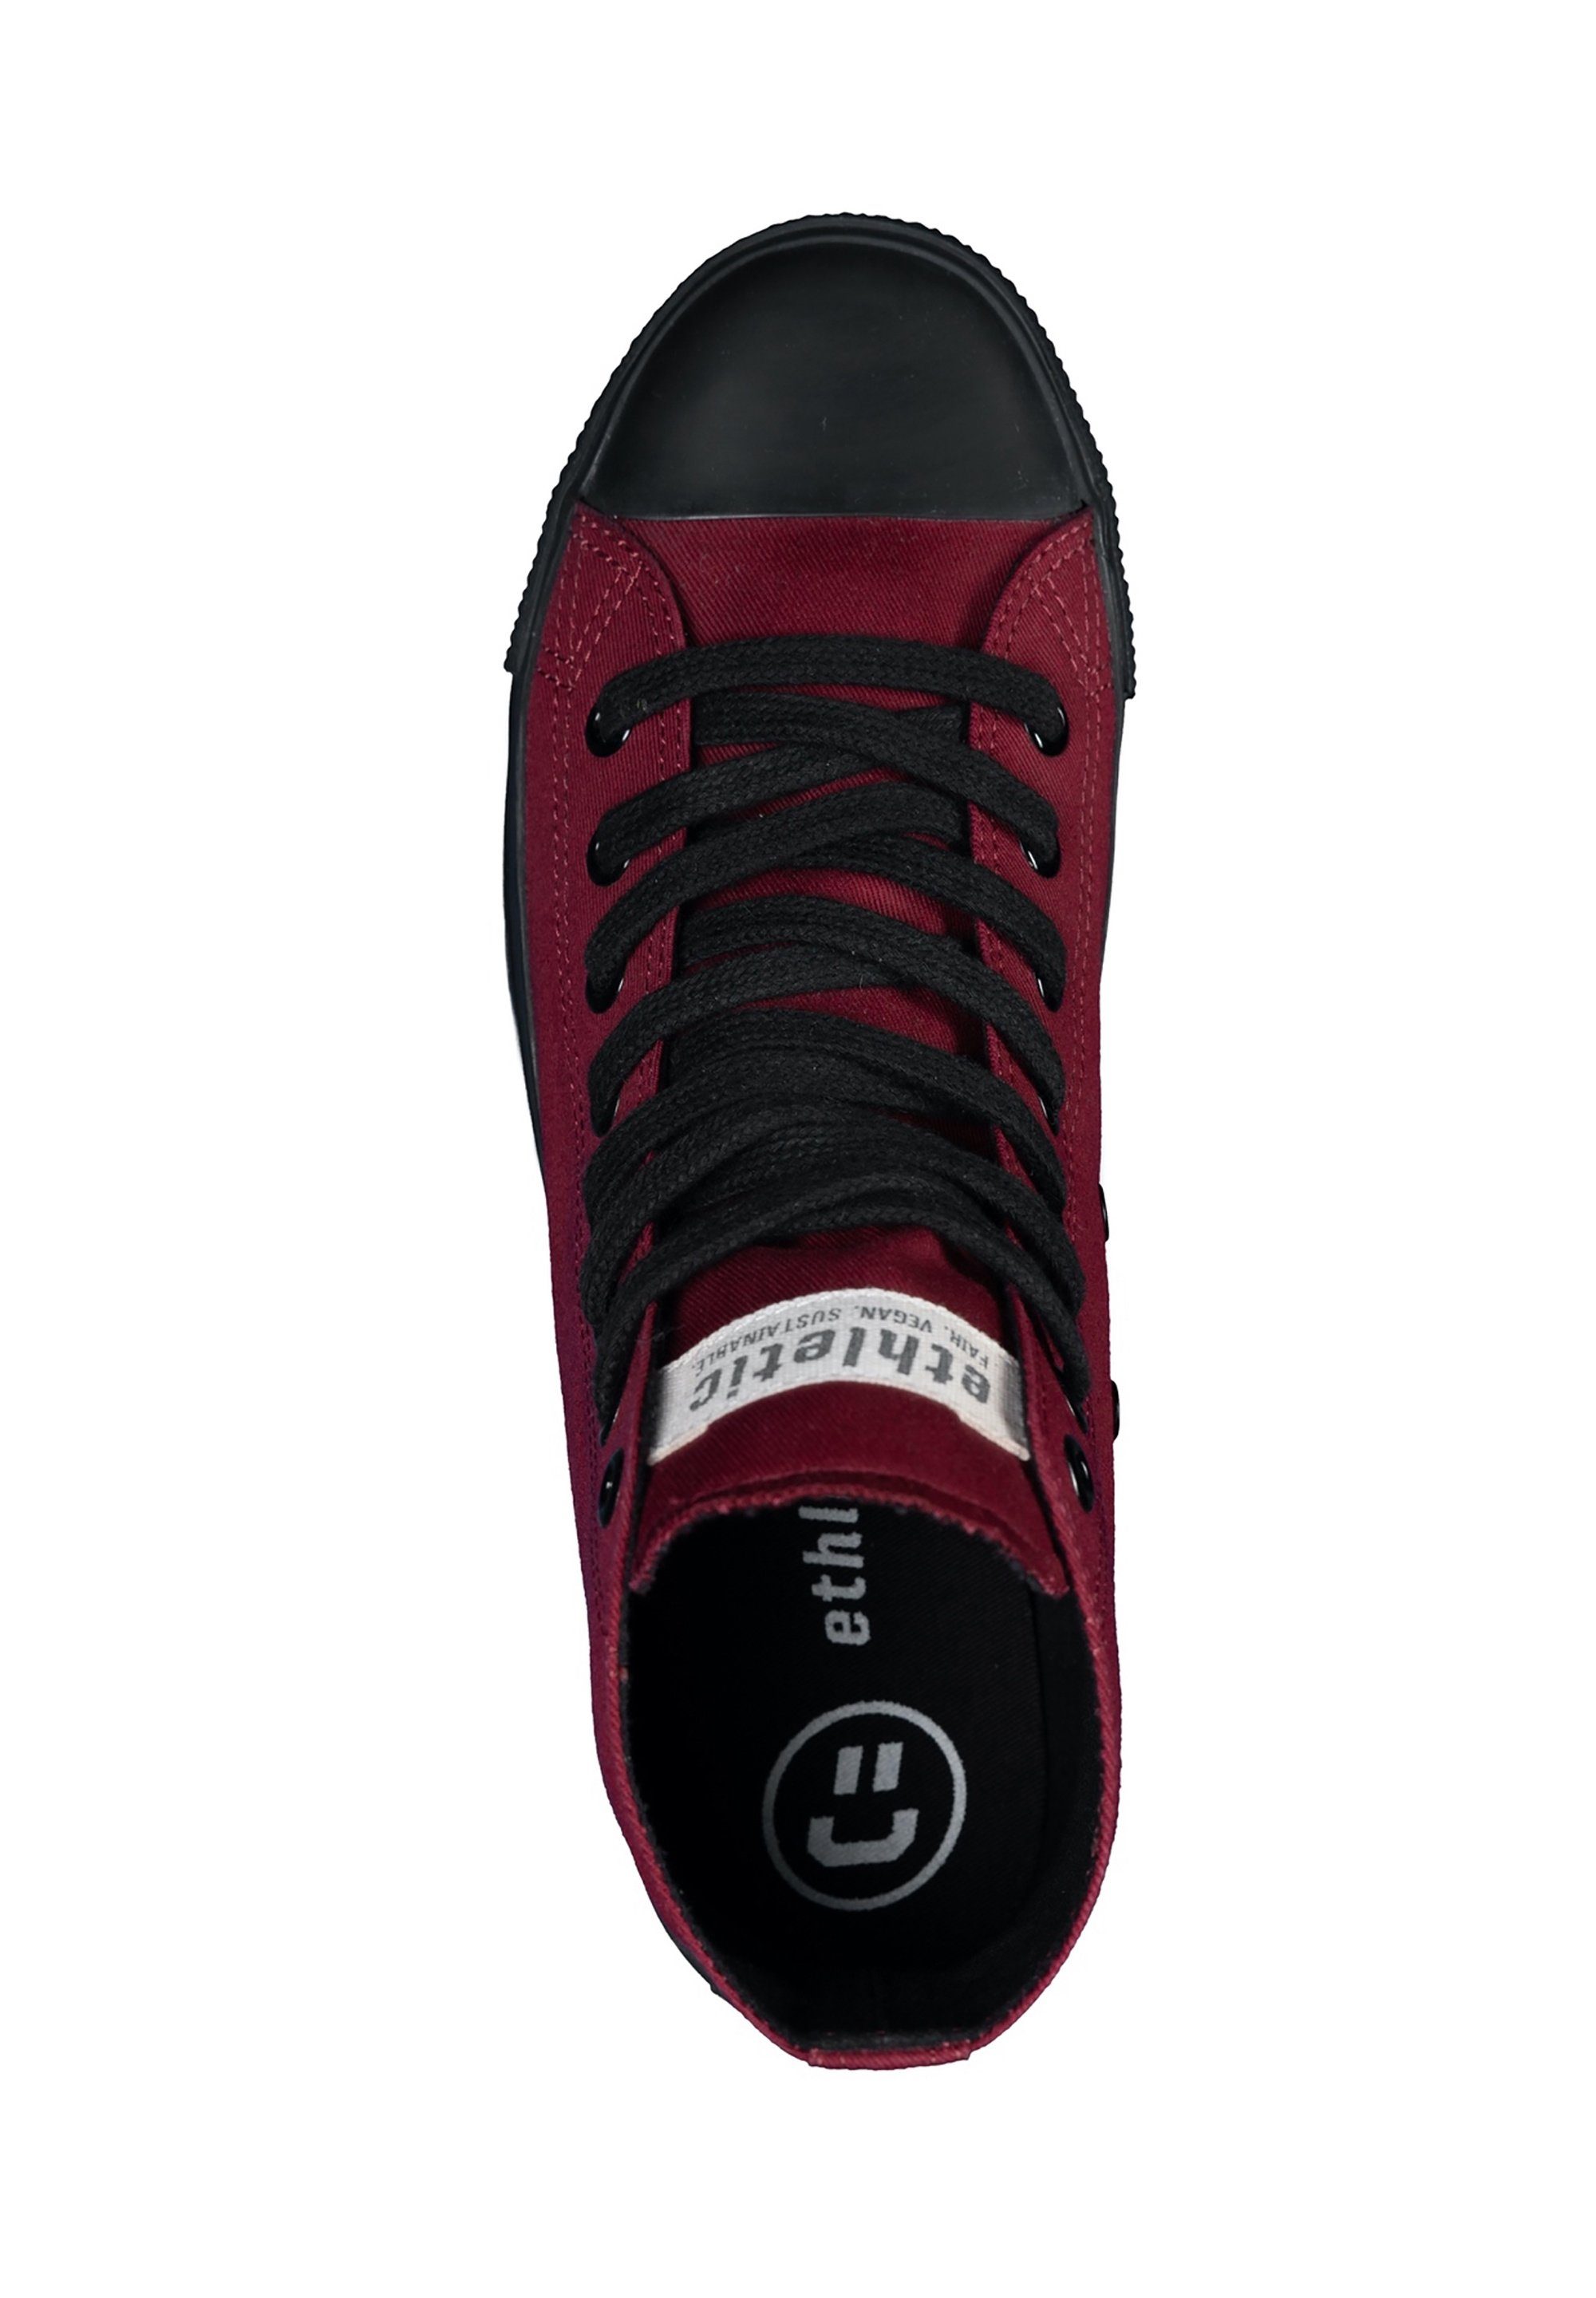 ETHLETIC Black Cap Hi jet Produkt - Fairtrade blood black Cut Sneaker true